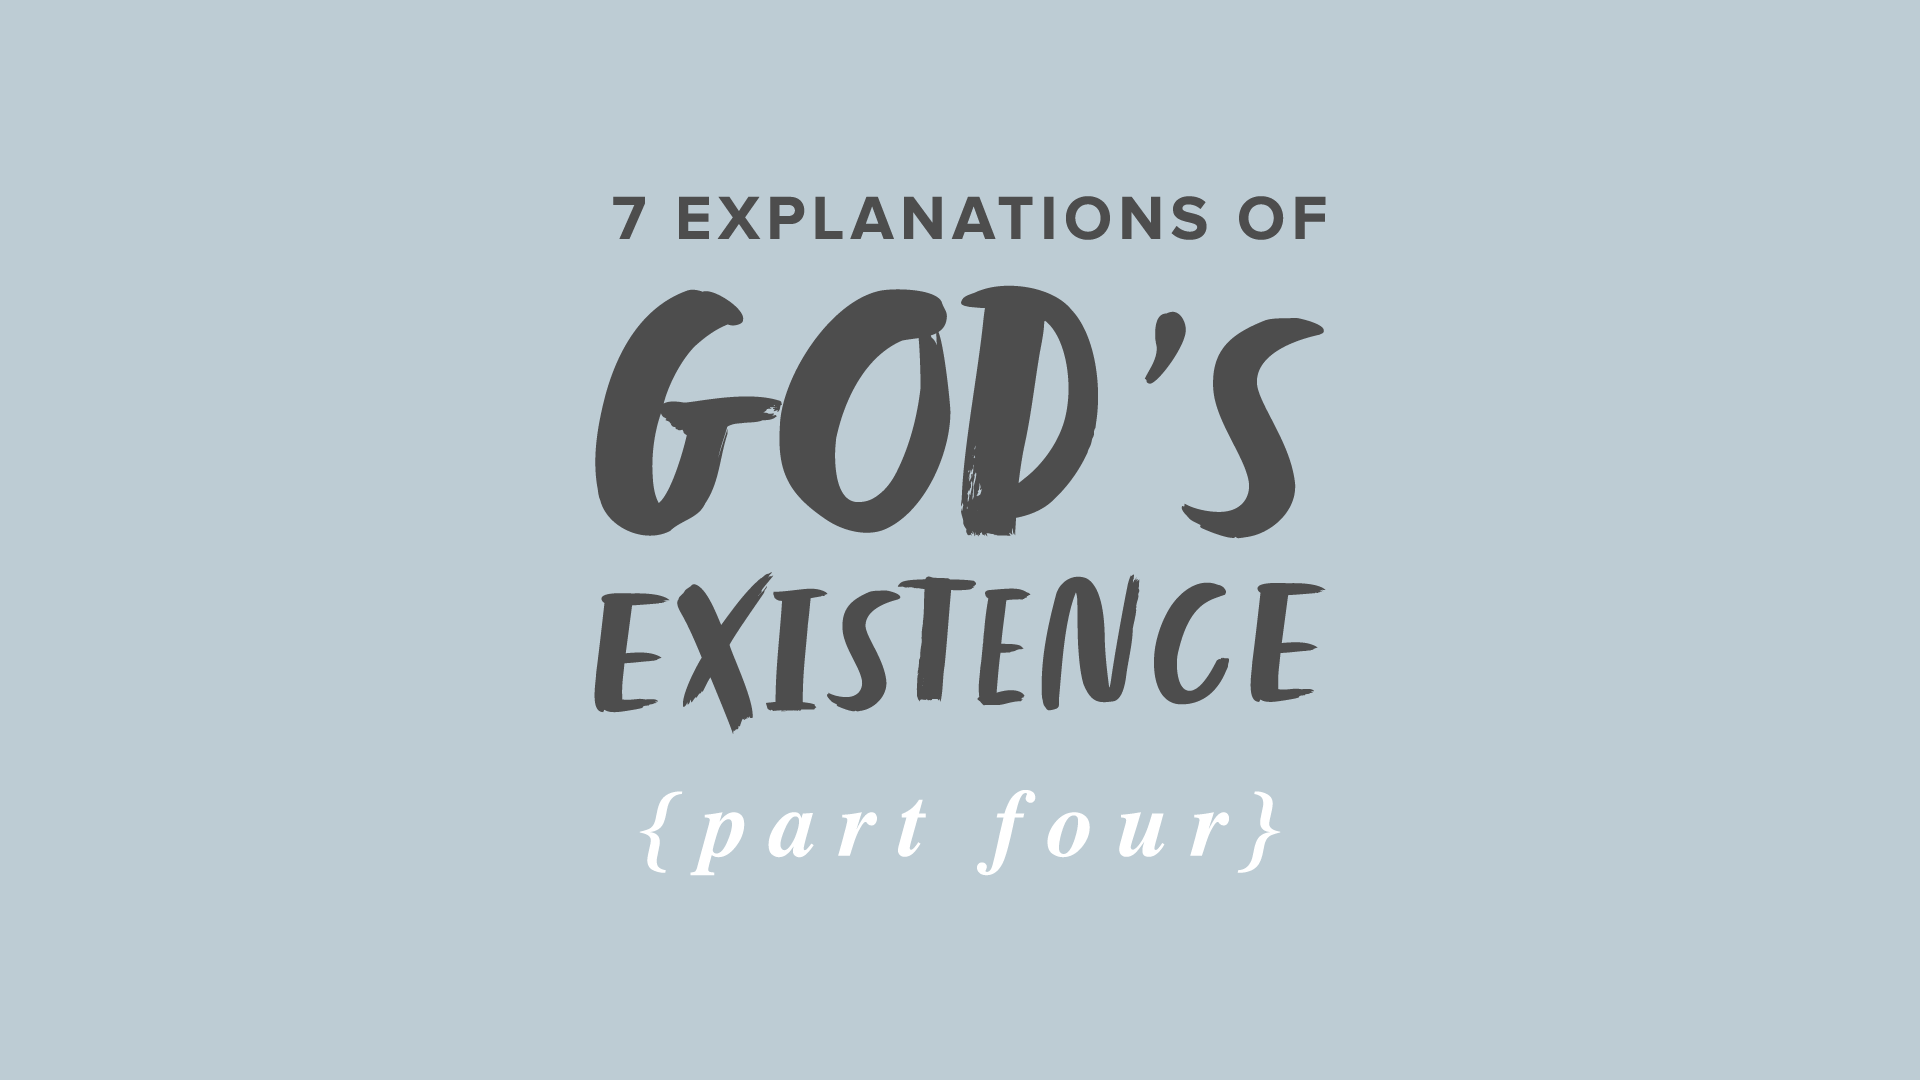 7 Explanations – Part 4